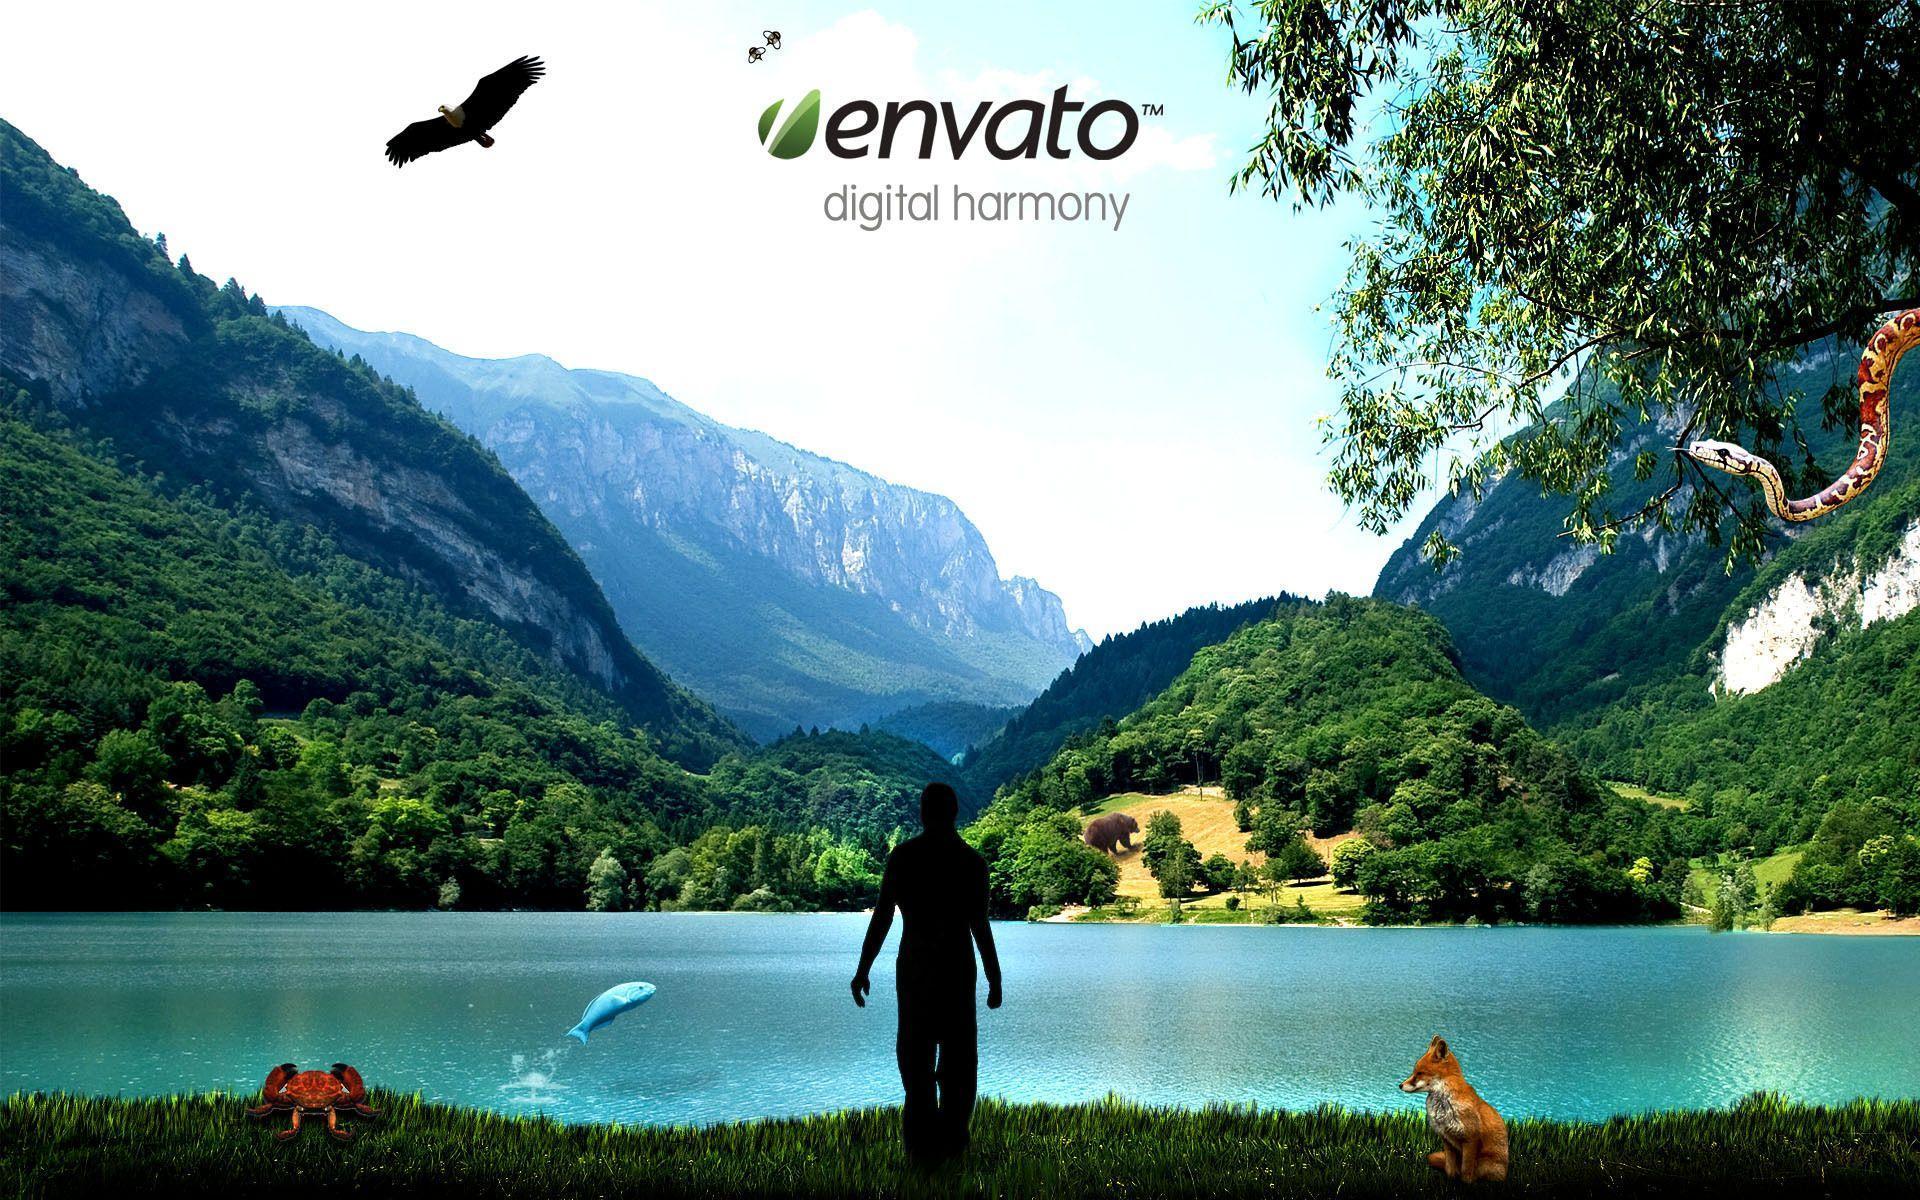 Digital harmony wallpaper. Digital harmony